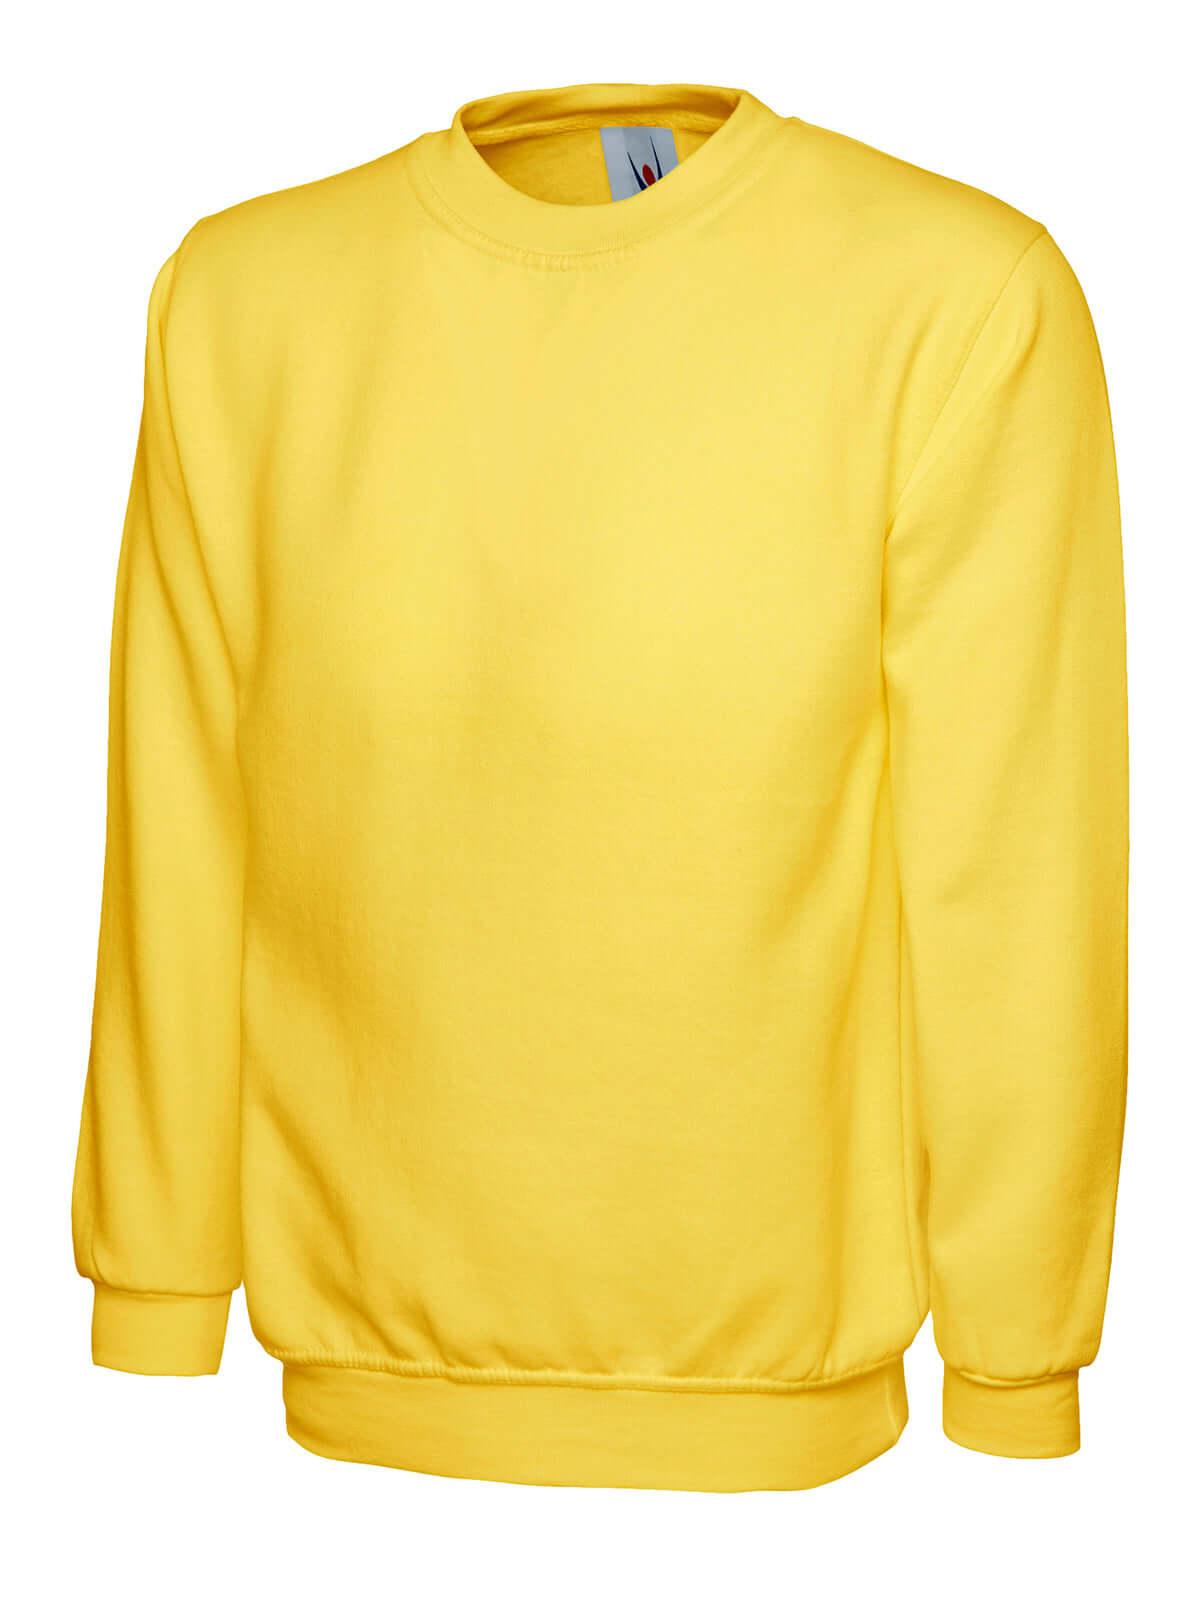 Pegasus Uniform Classic Sweatshirt - Yellow